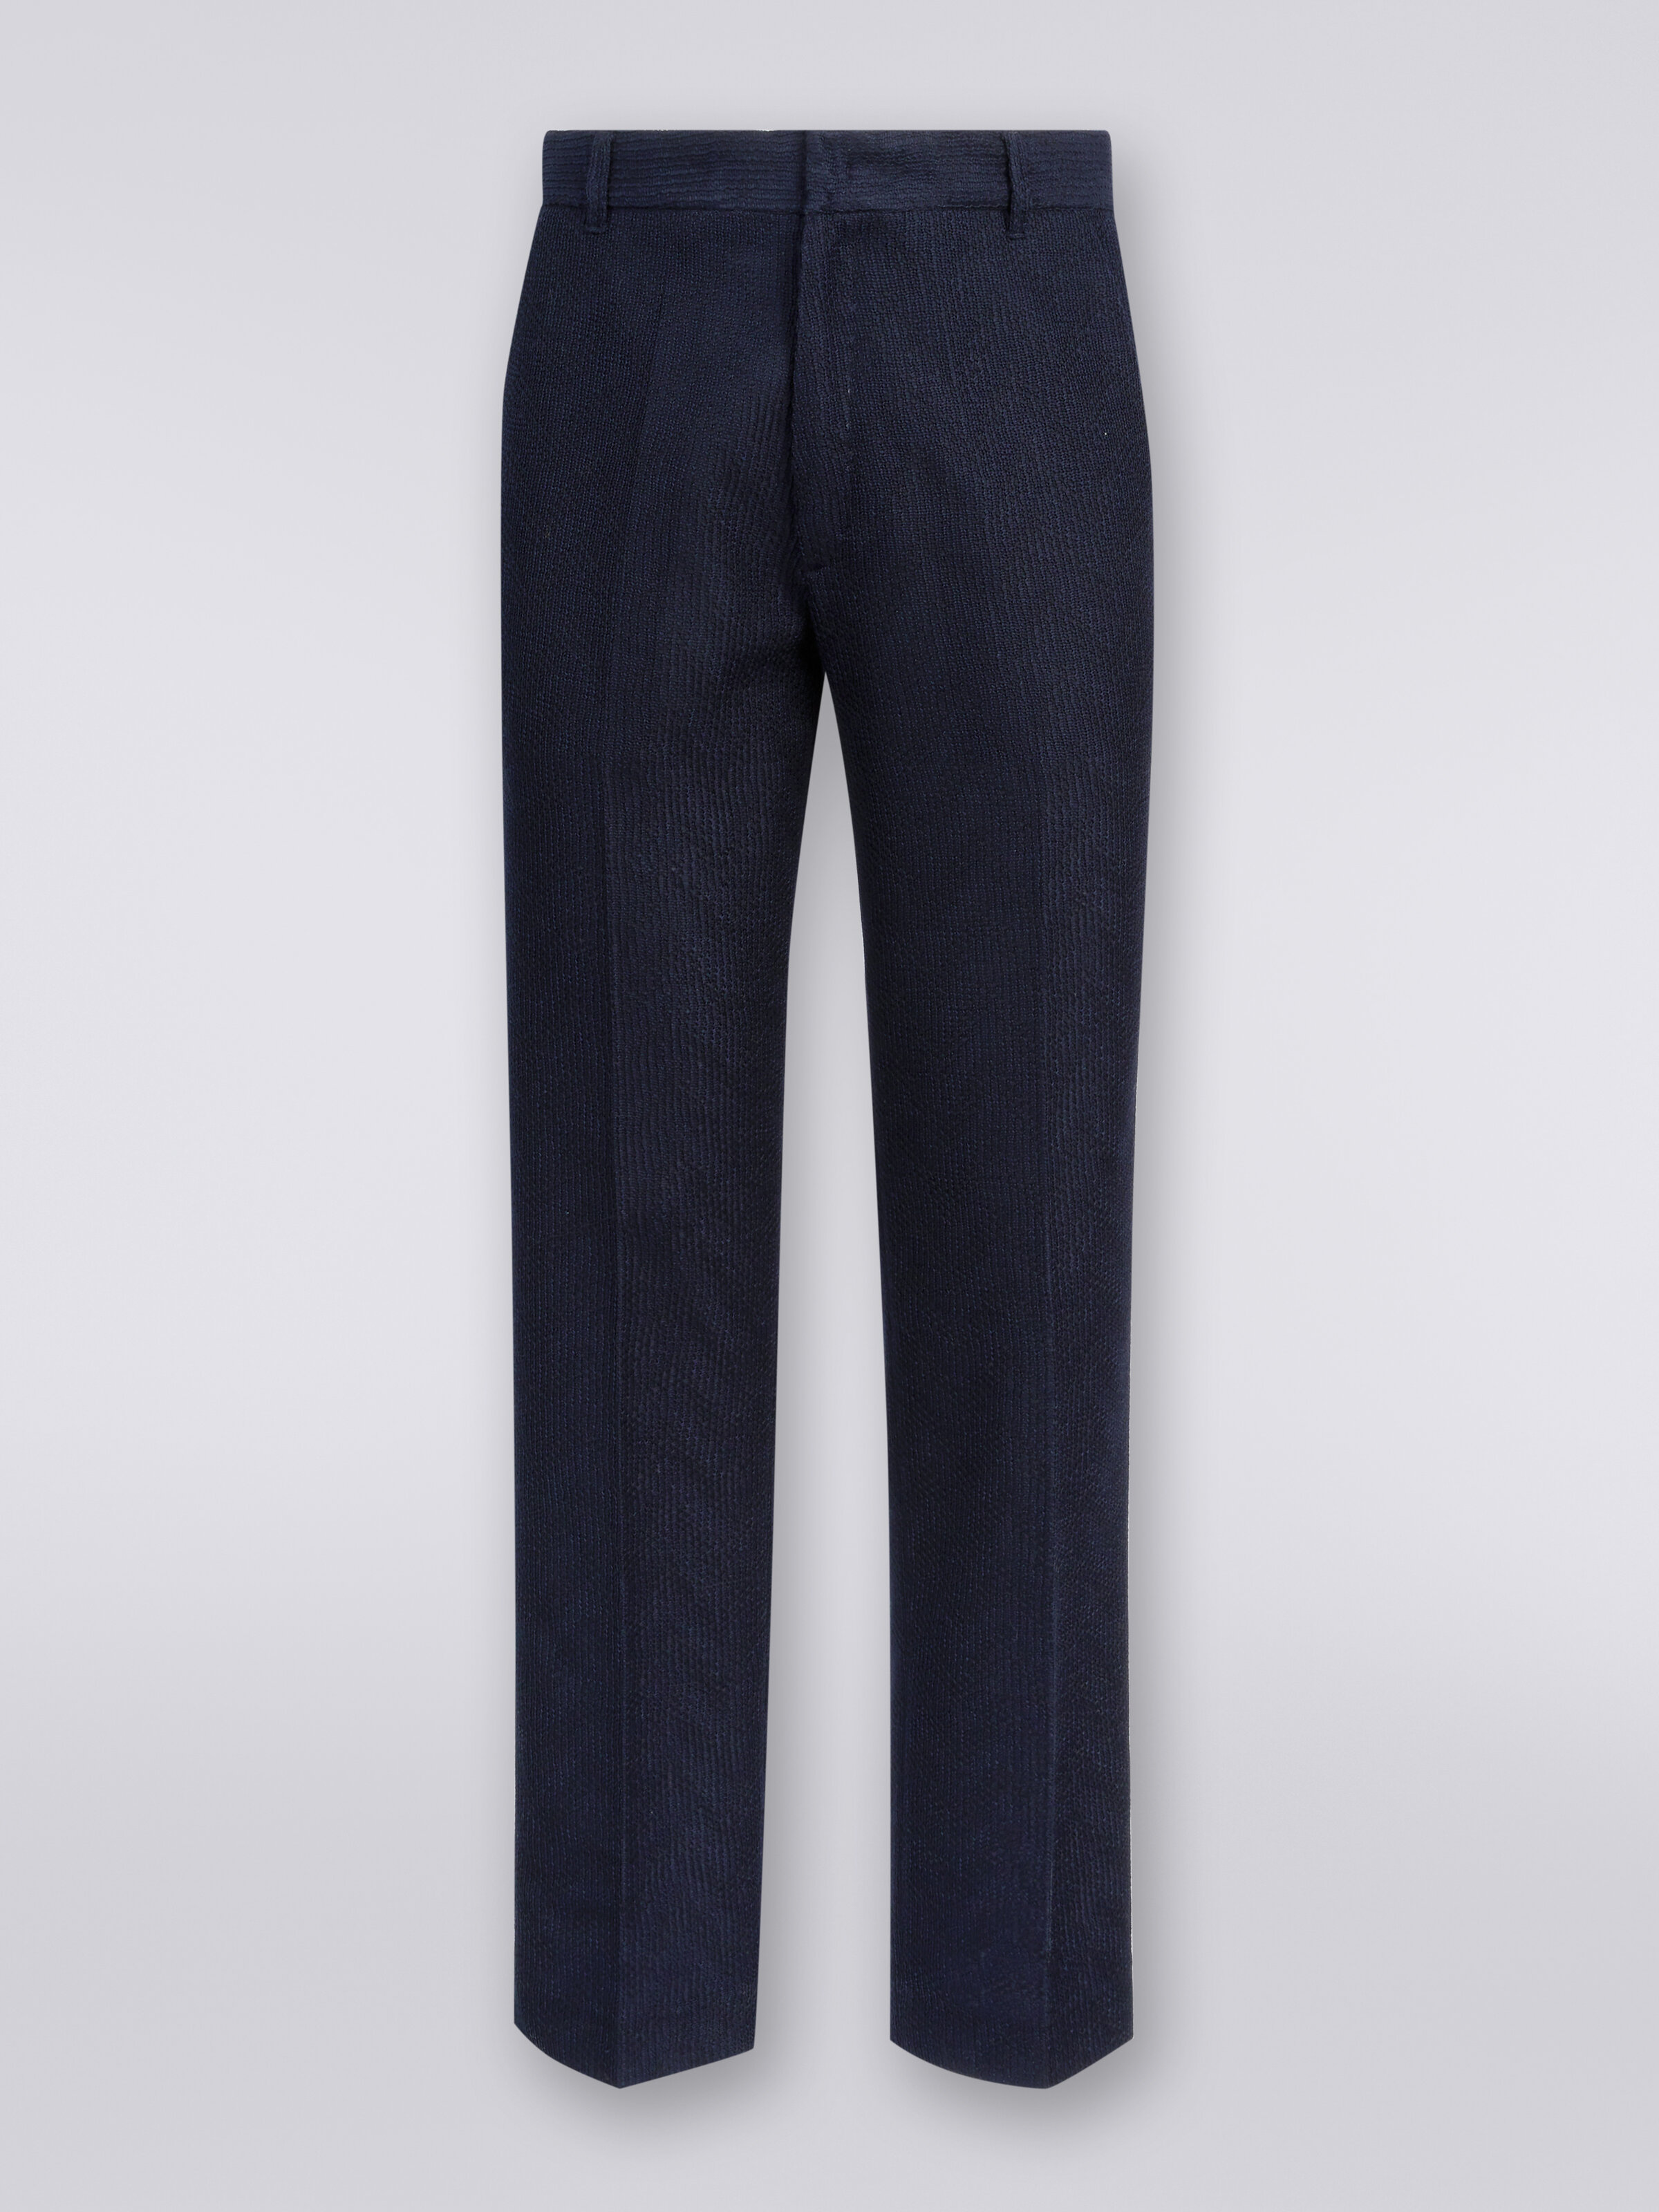 Cotton chevron chino trousers, Navy Blue  - 0